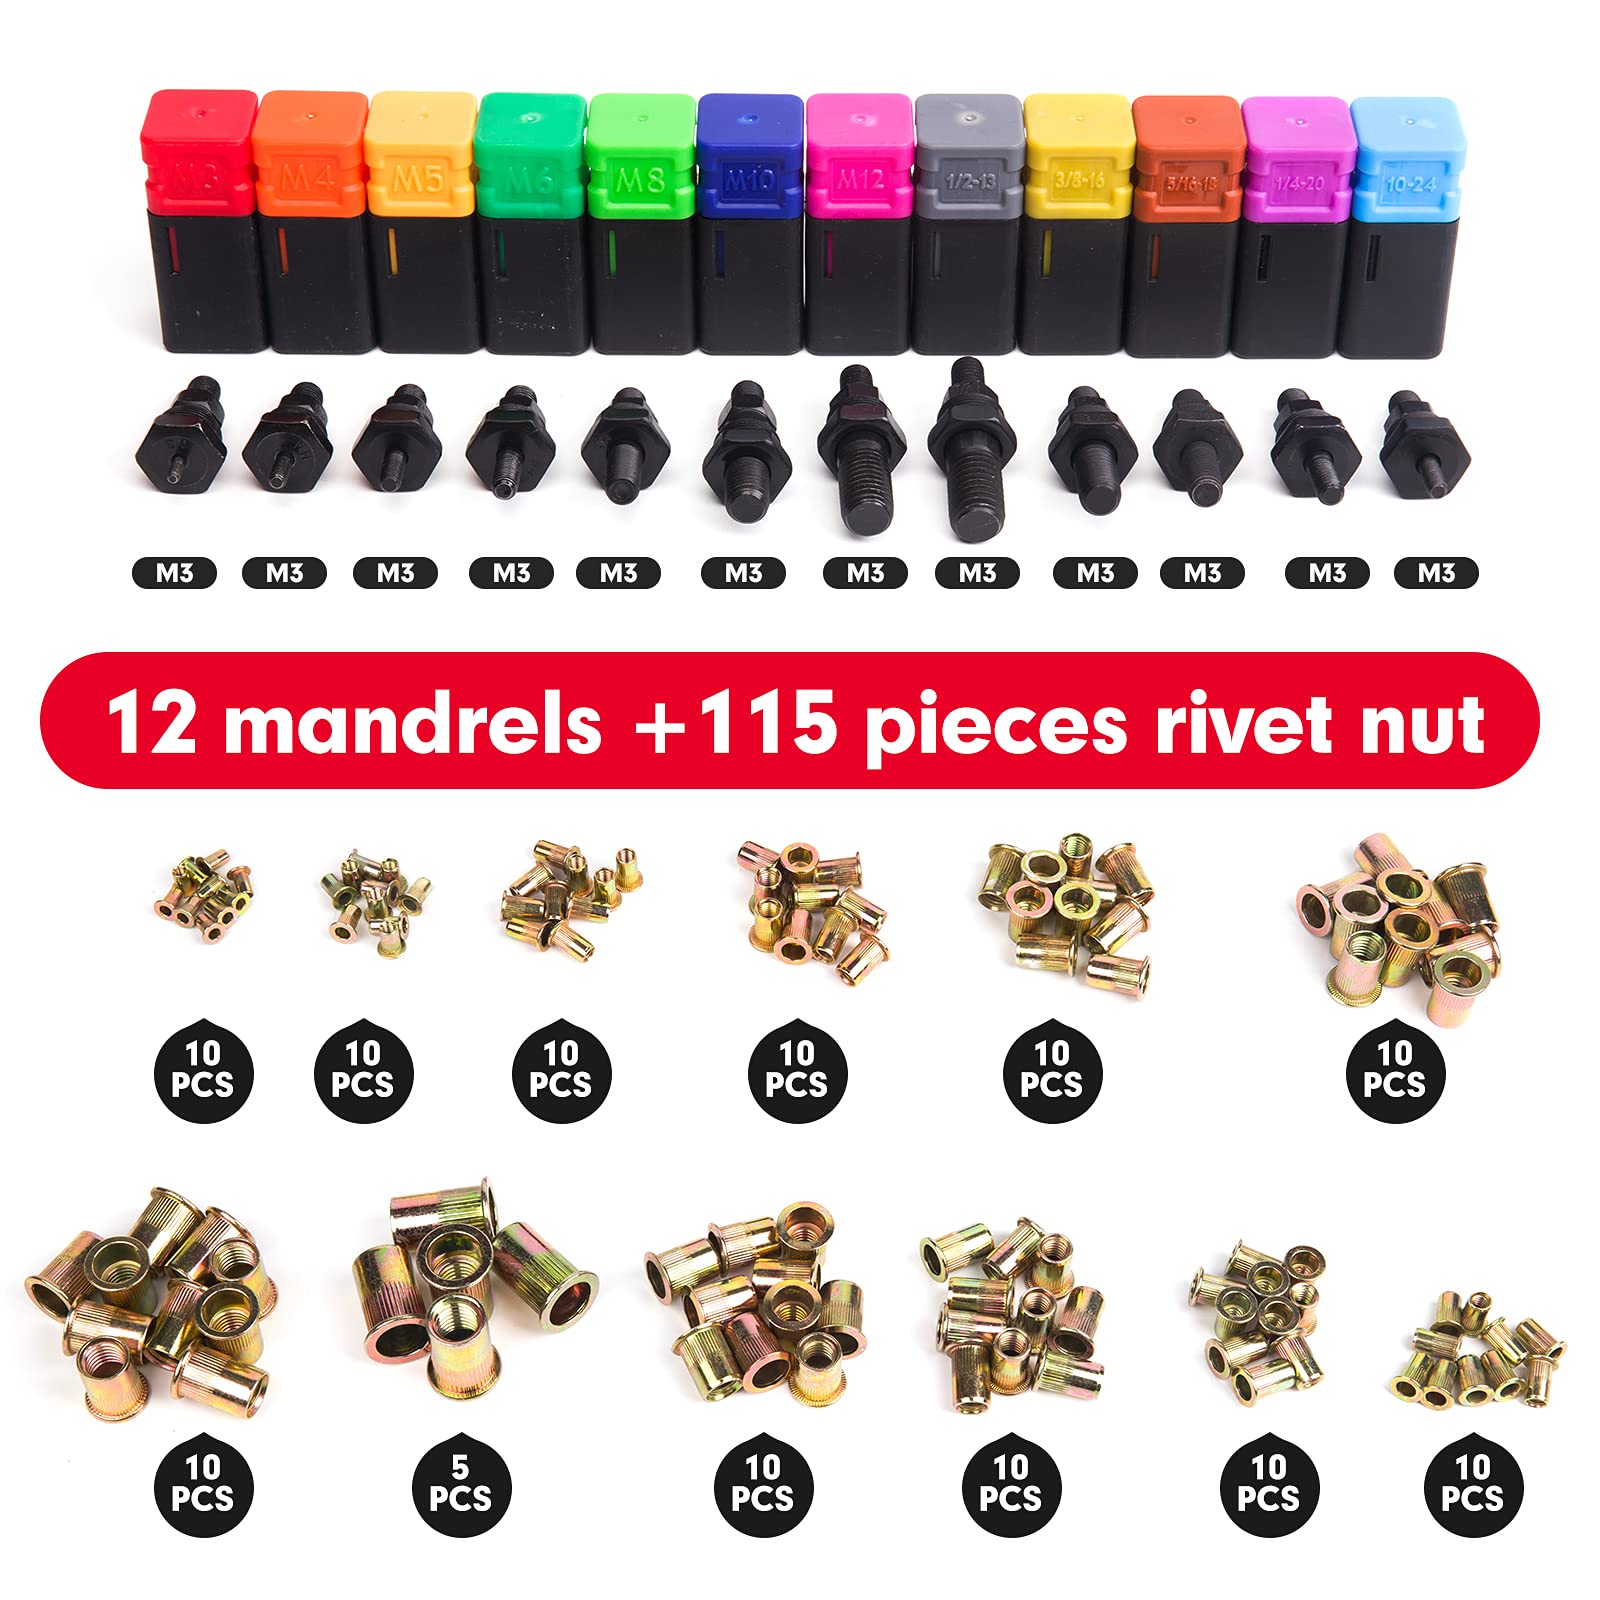 RZX 16" RIVET NUT TOOL Hand Blind Riveter,RIVNUT Riveting Tools with Nut Setting System totally 12mandrels M3 M4 M5,m6,m8,m10 M12, 10-24, 1/4-20, 5/16-18,3/8-16,1/2-13 +115PCS Rivets Nuts